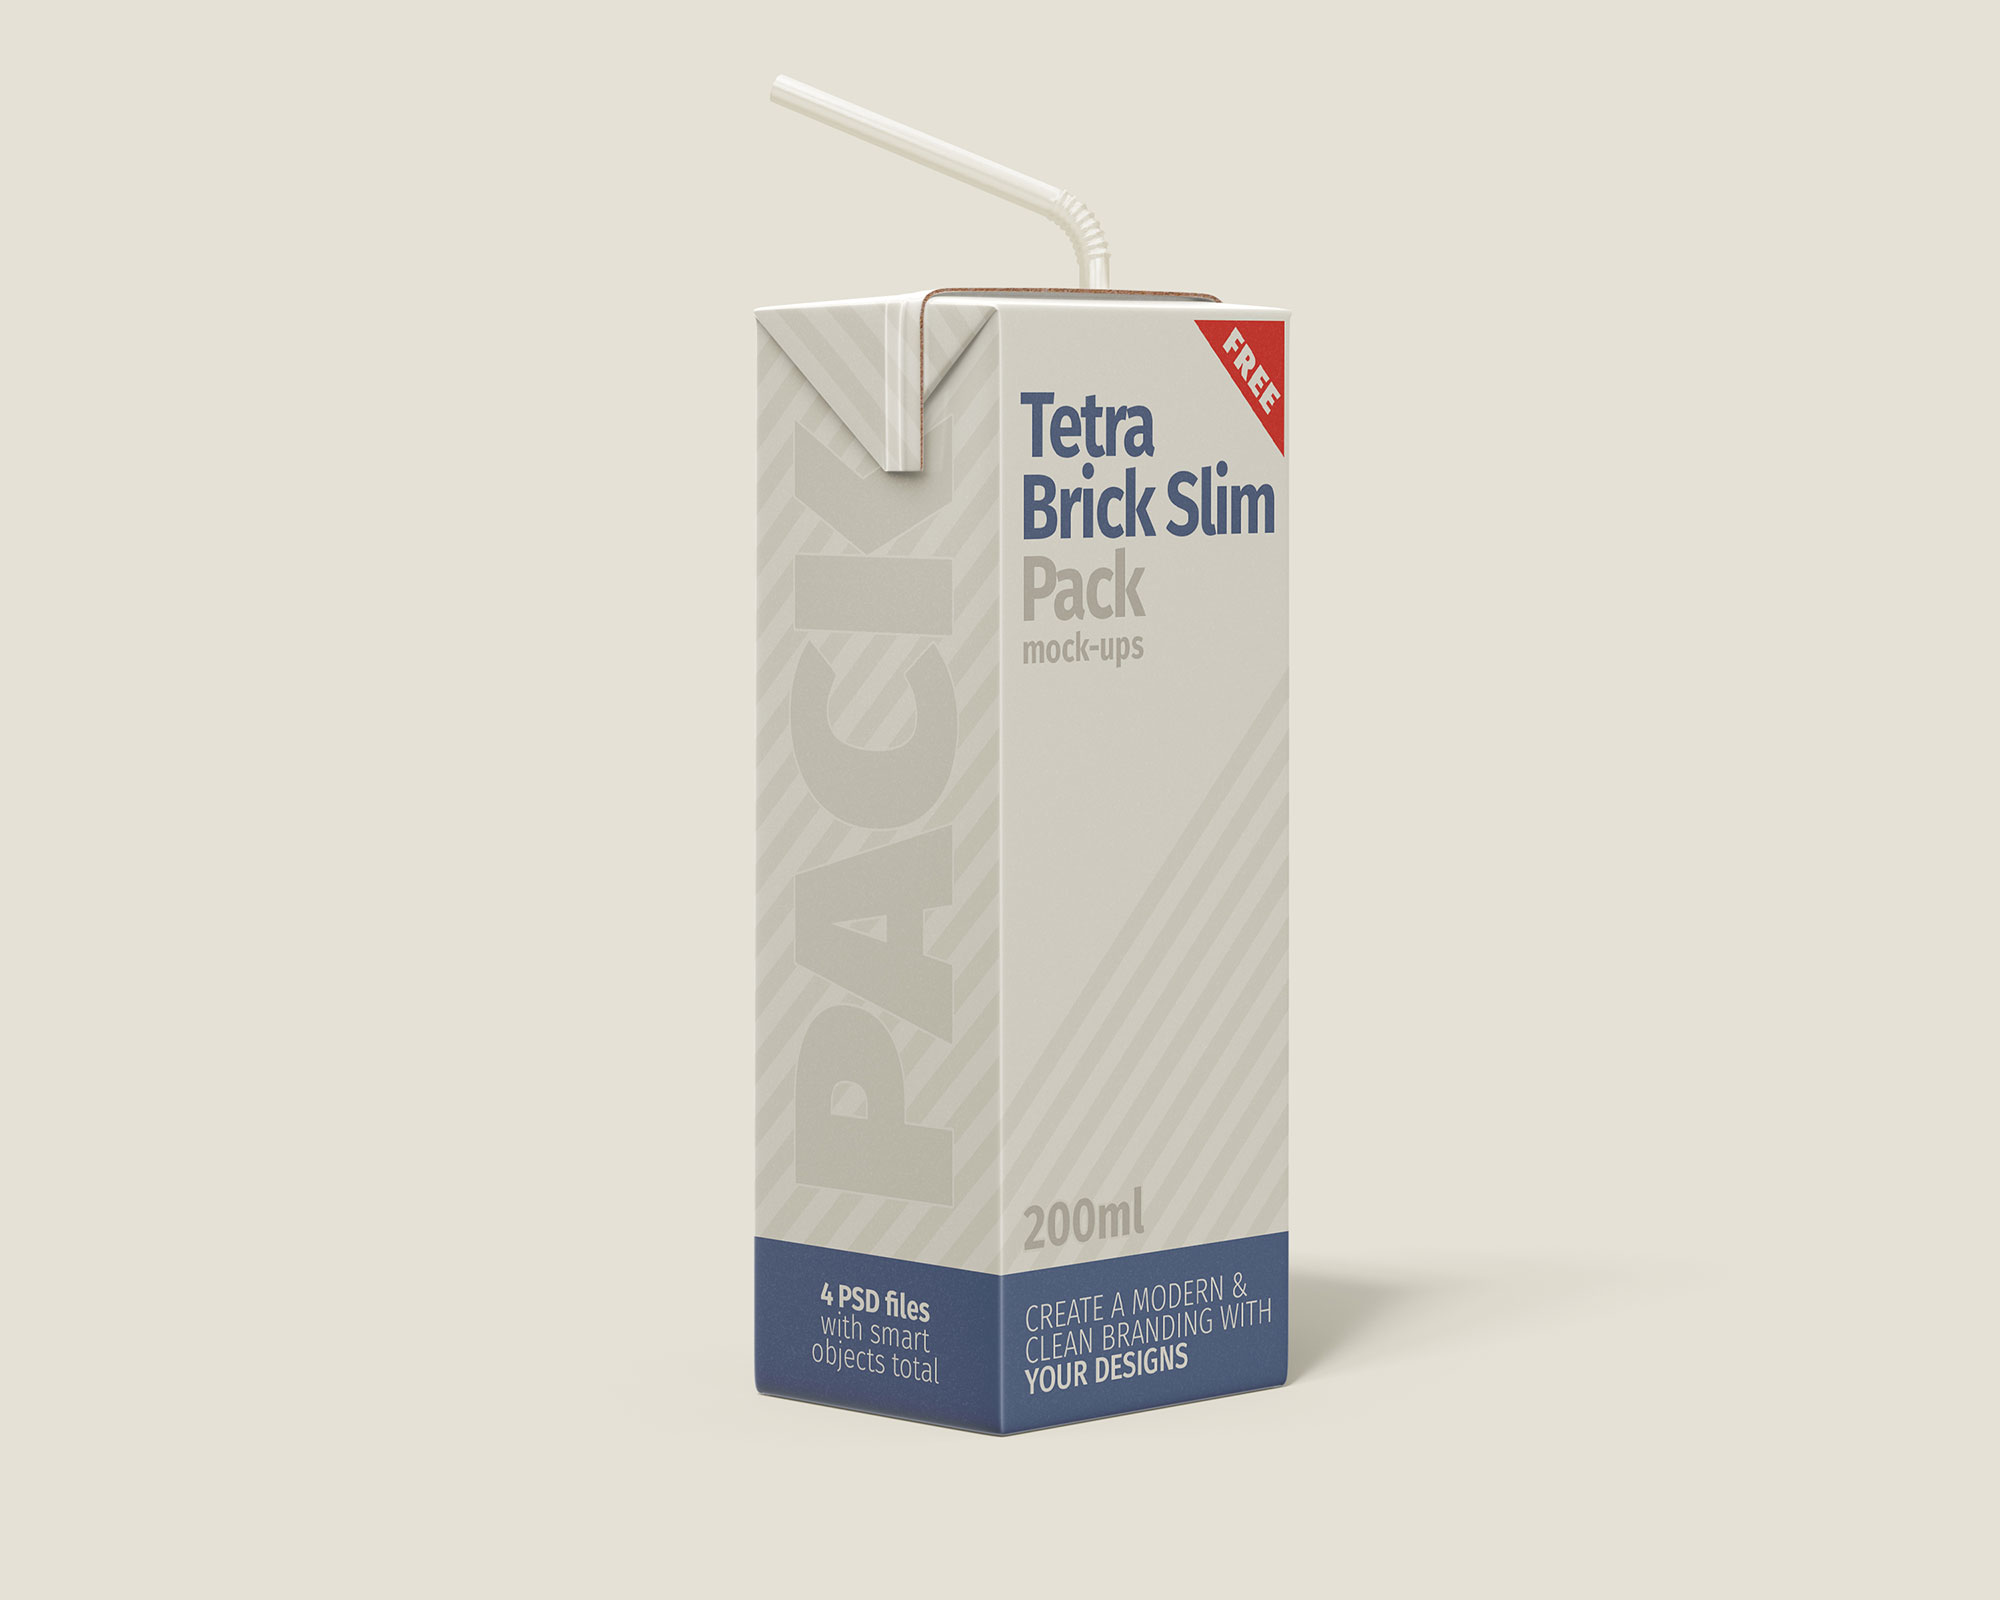 Free-Juice-Milk-Tetra-Brick-Slim-200-ml-Mockup-PSD-Set